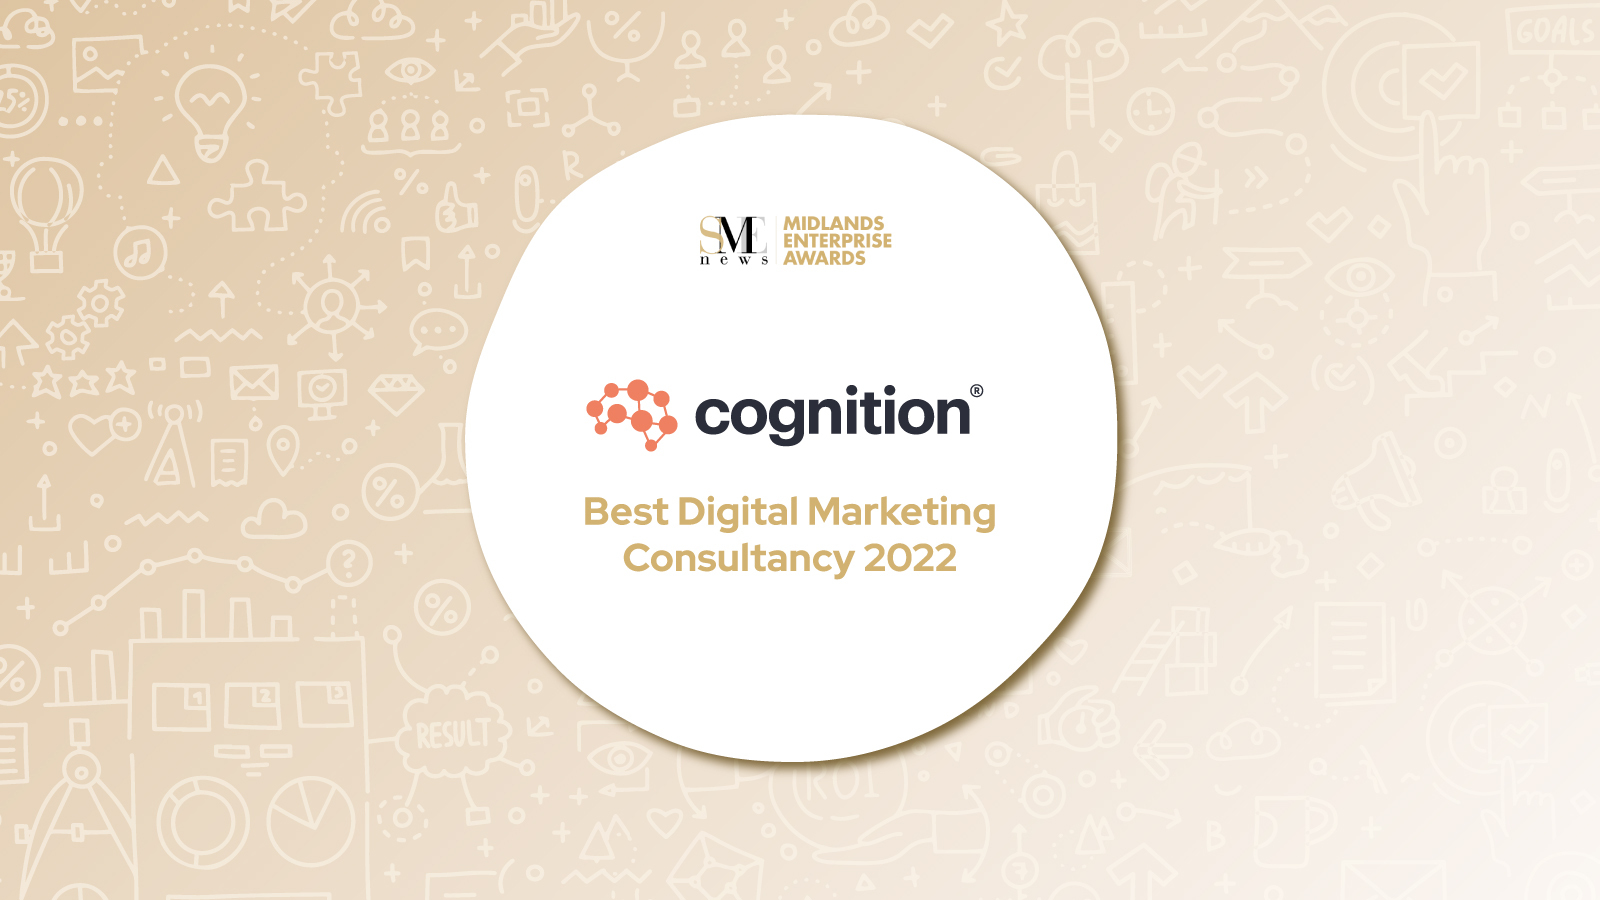 Cognition named Best Digital Marketing Consultancy